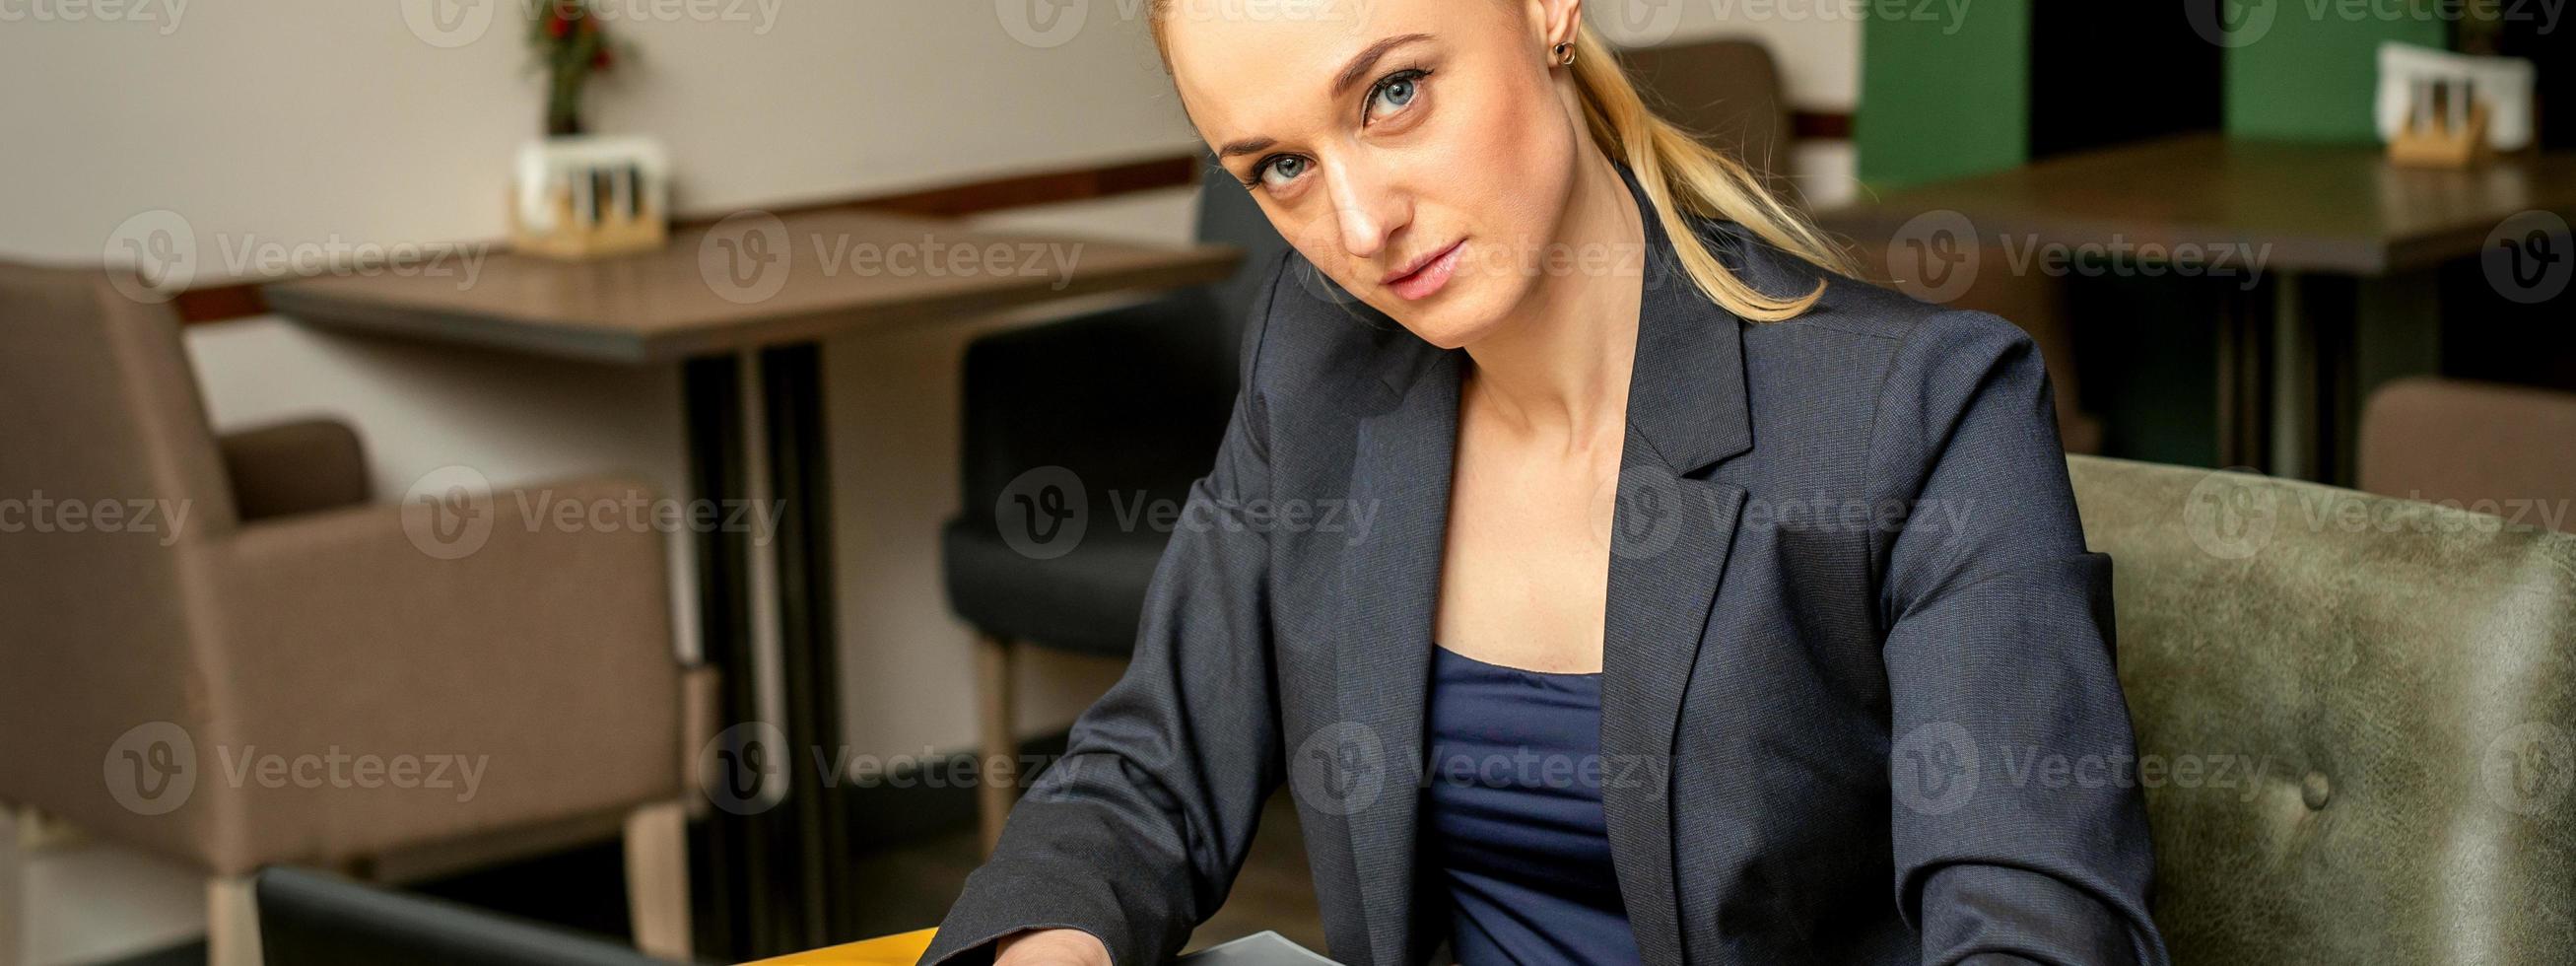 Retrato de una joven empresaria foto